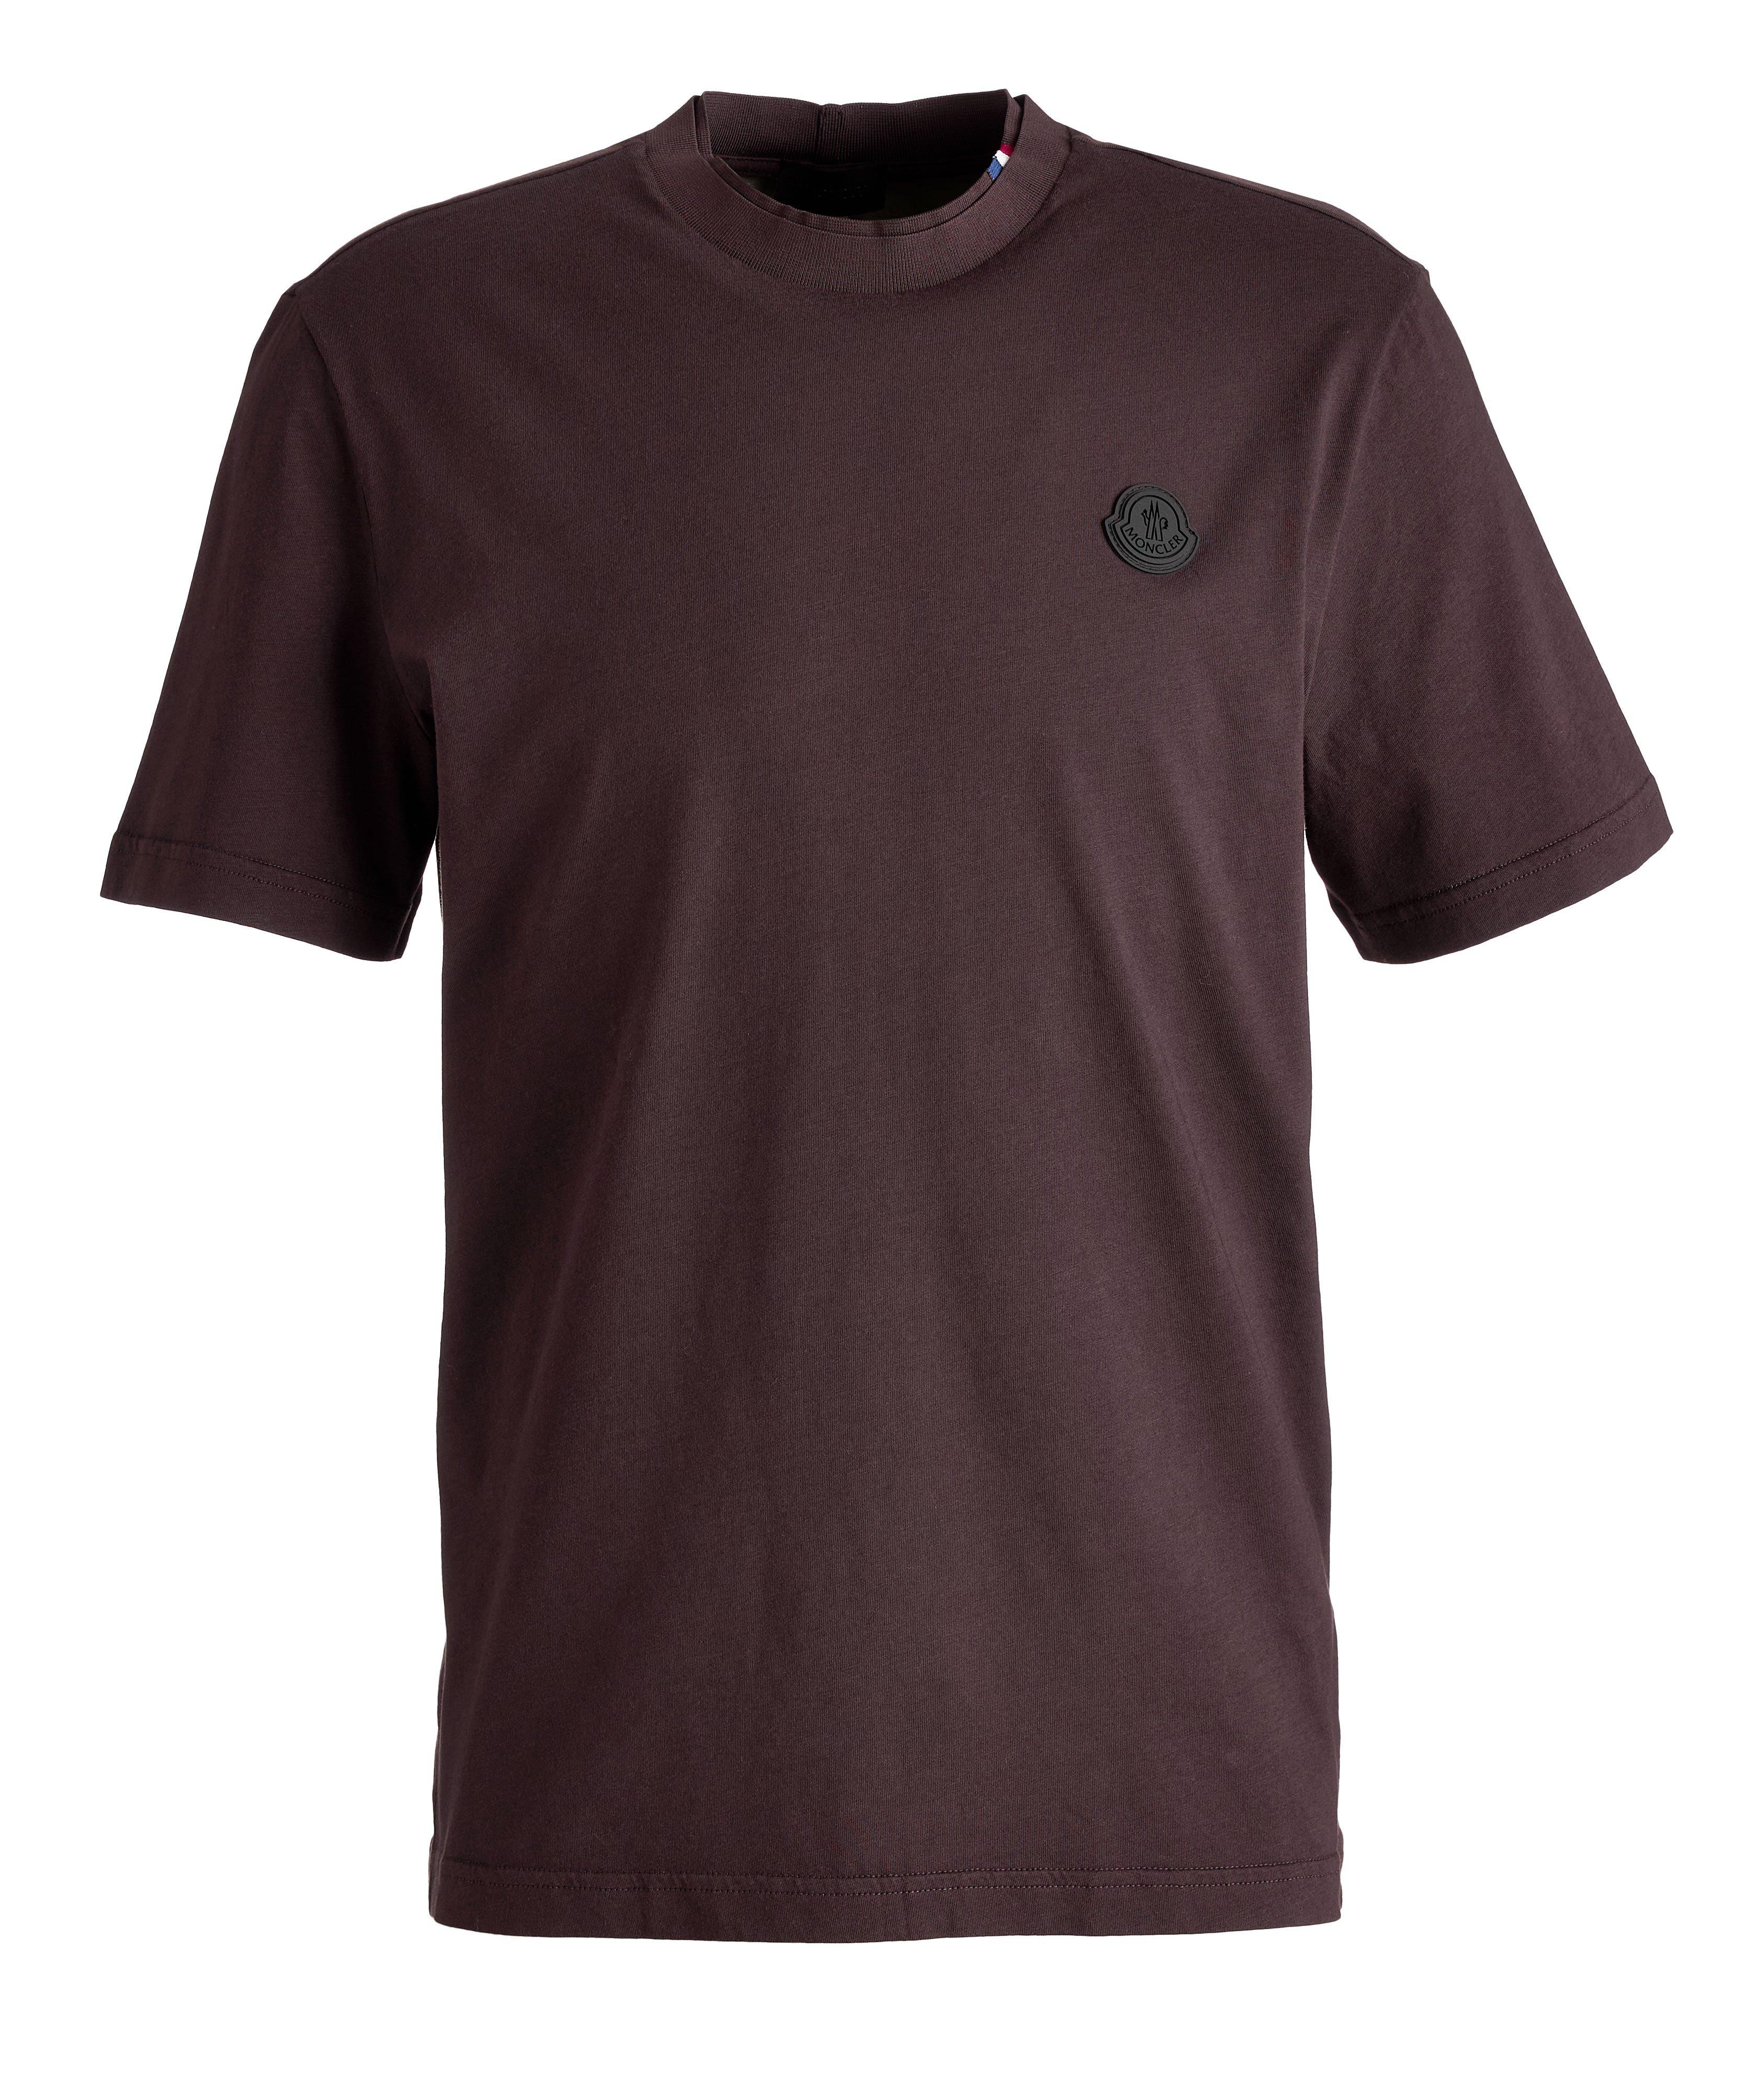 Maglia Cotton T-Shirt image 0